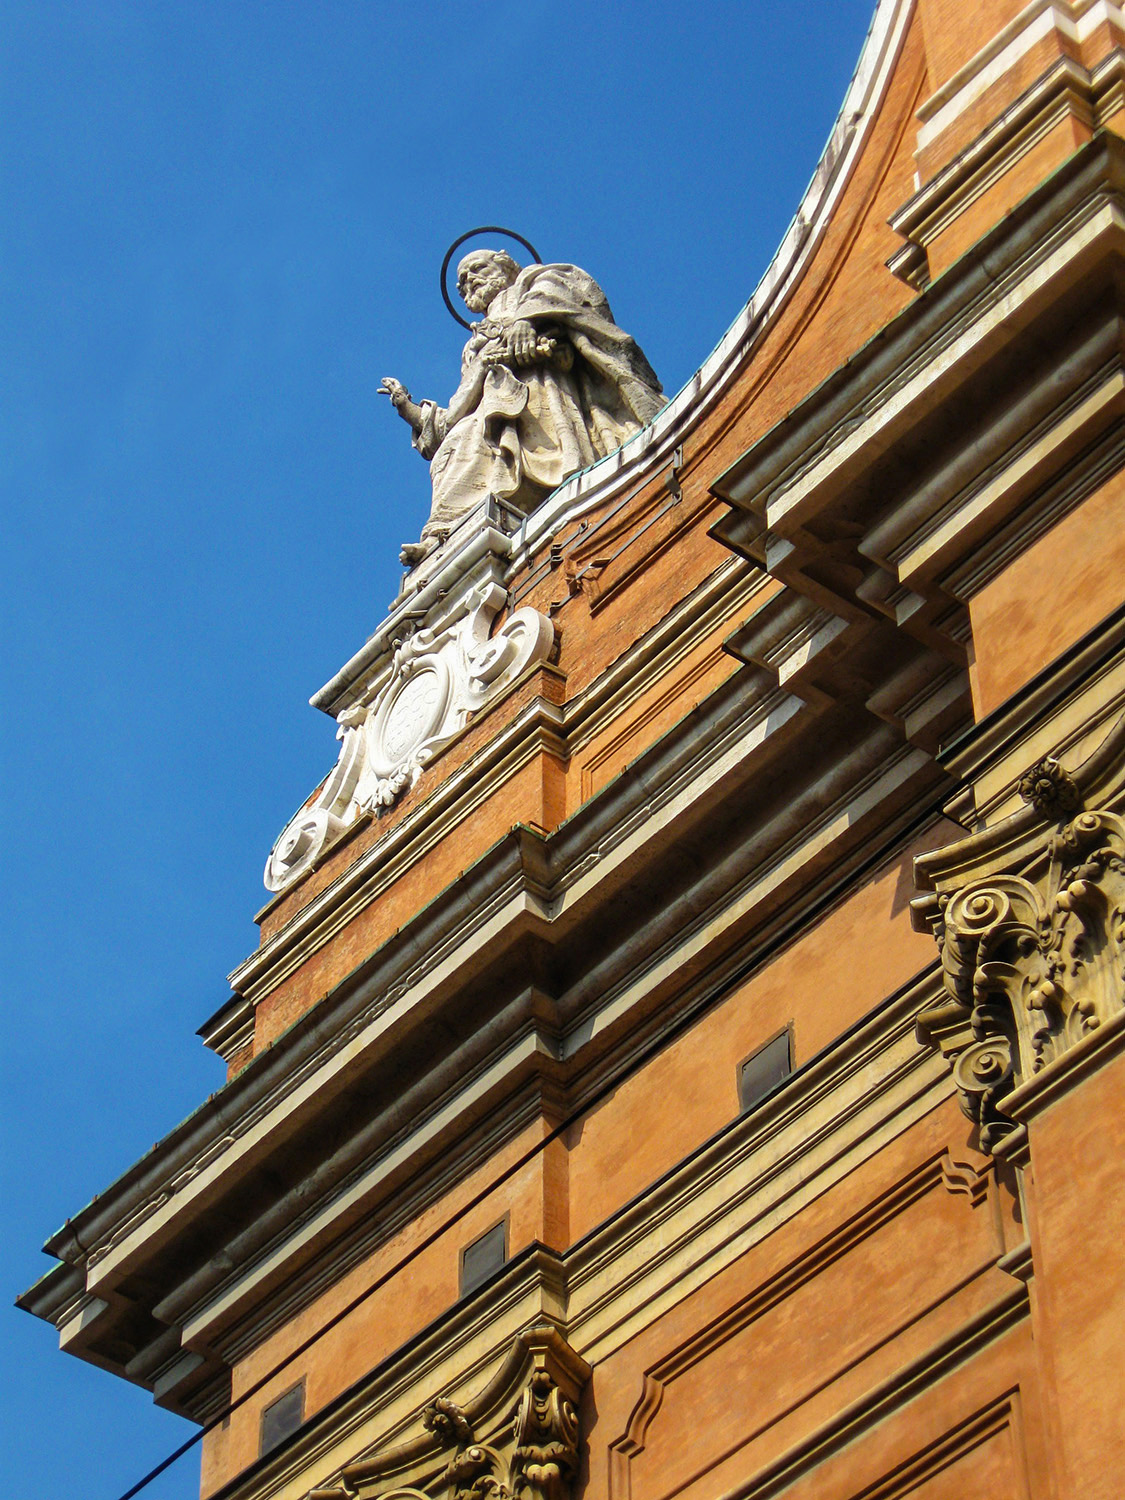 photo: https://upload.wikimedia.org/wikipedia/commons/c/c2/Bologna_%28BO%29%2C_Cattedrale_Metropolitana_di_San_Pietro%2C_dettaglio.jpg